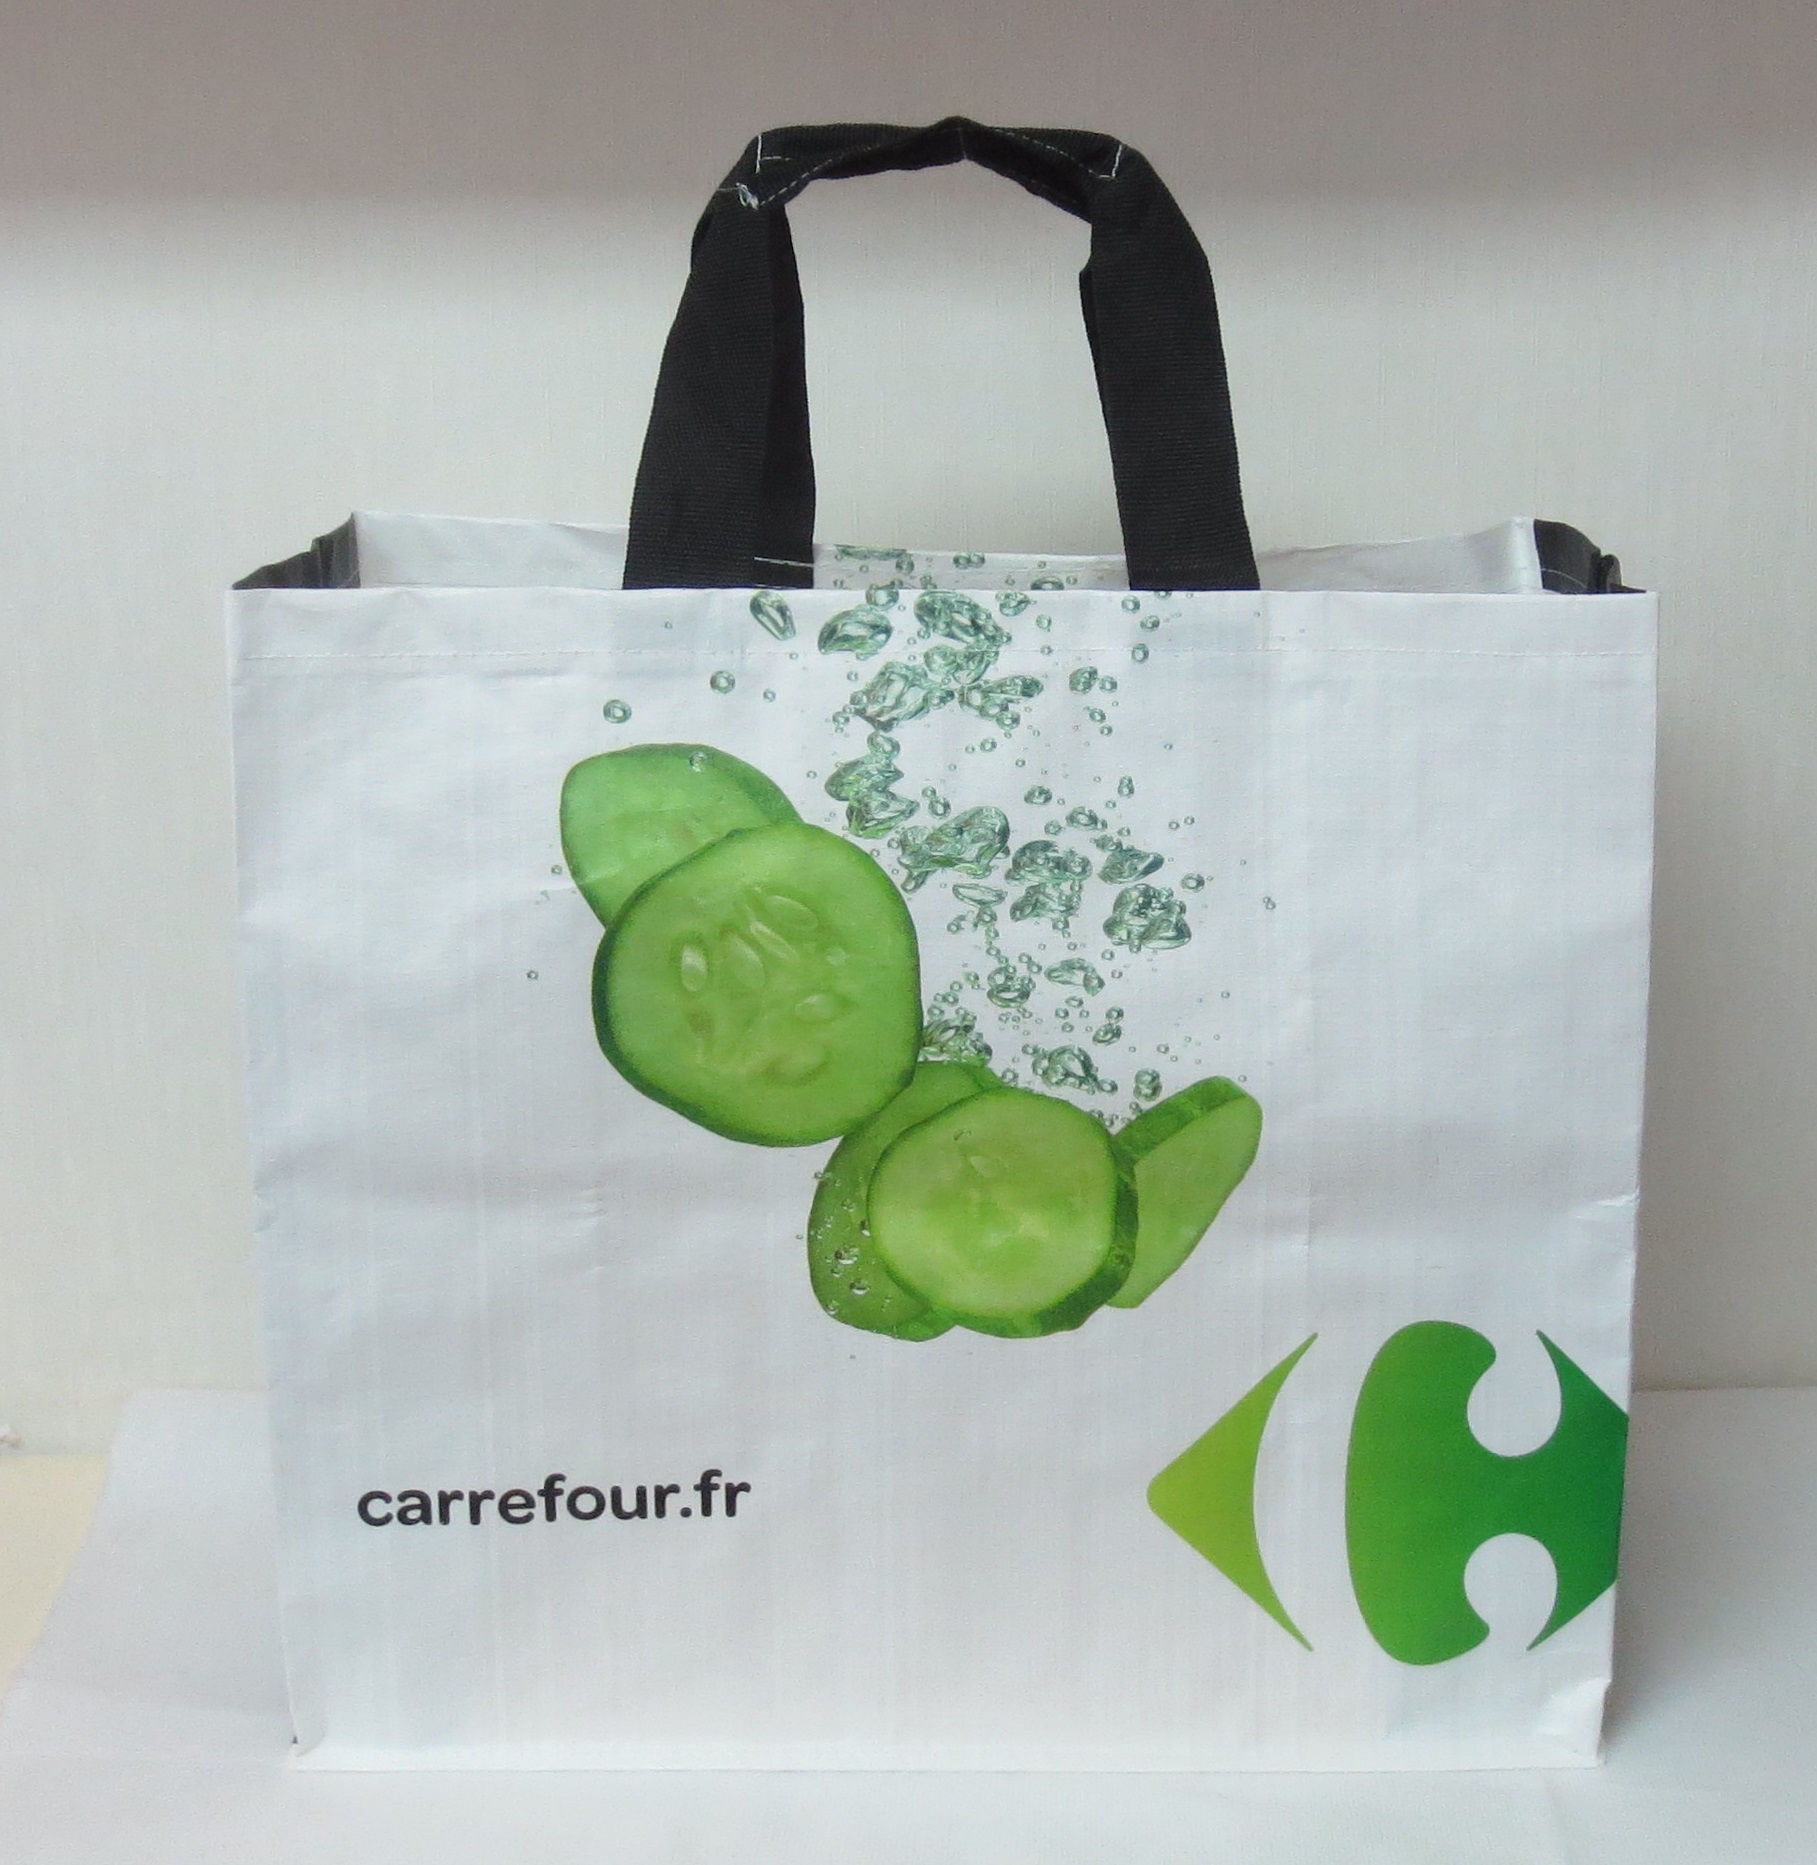 Cooler Bag Carrefour on Sale, 58% OFF | www.gruposincom.es